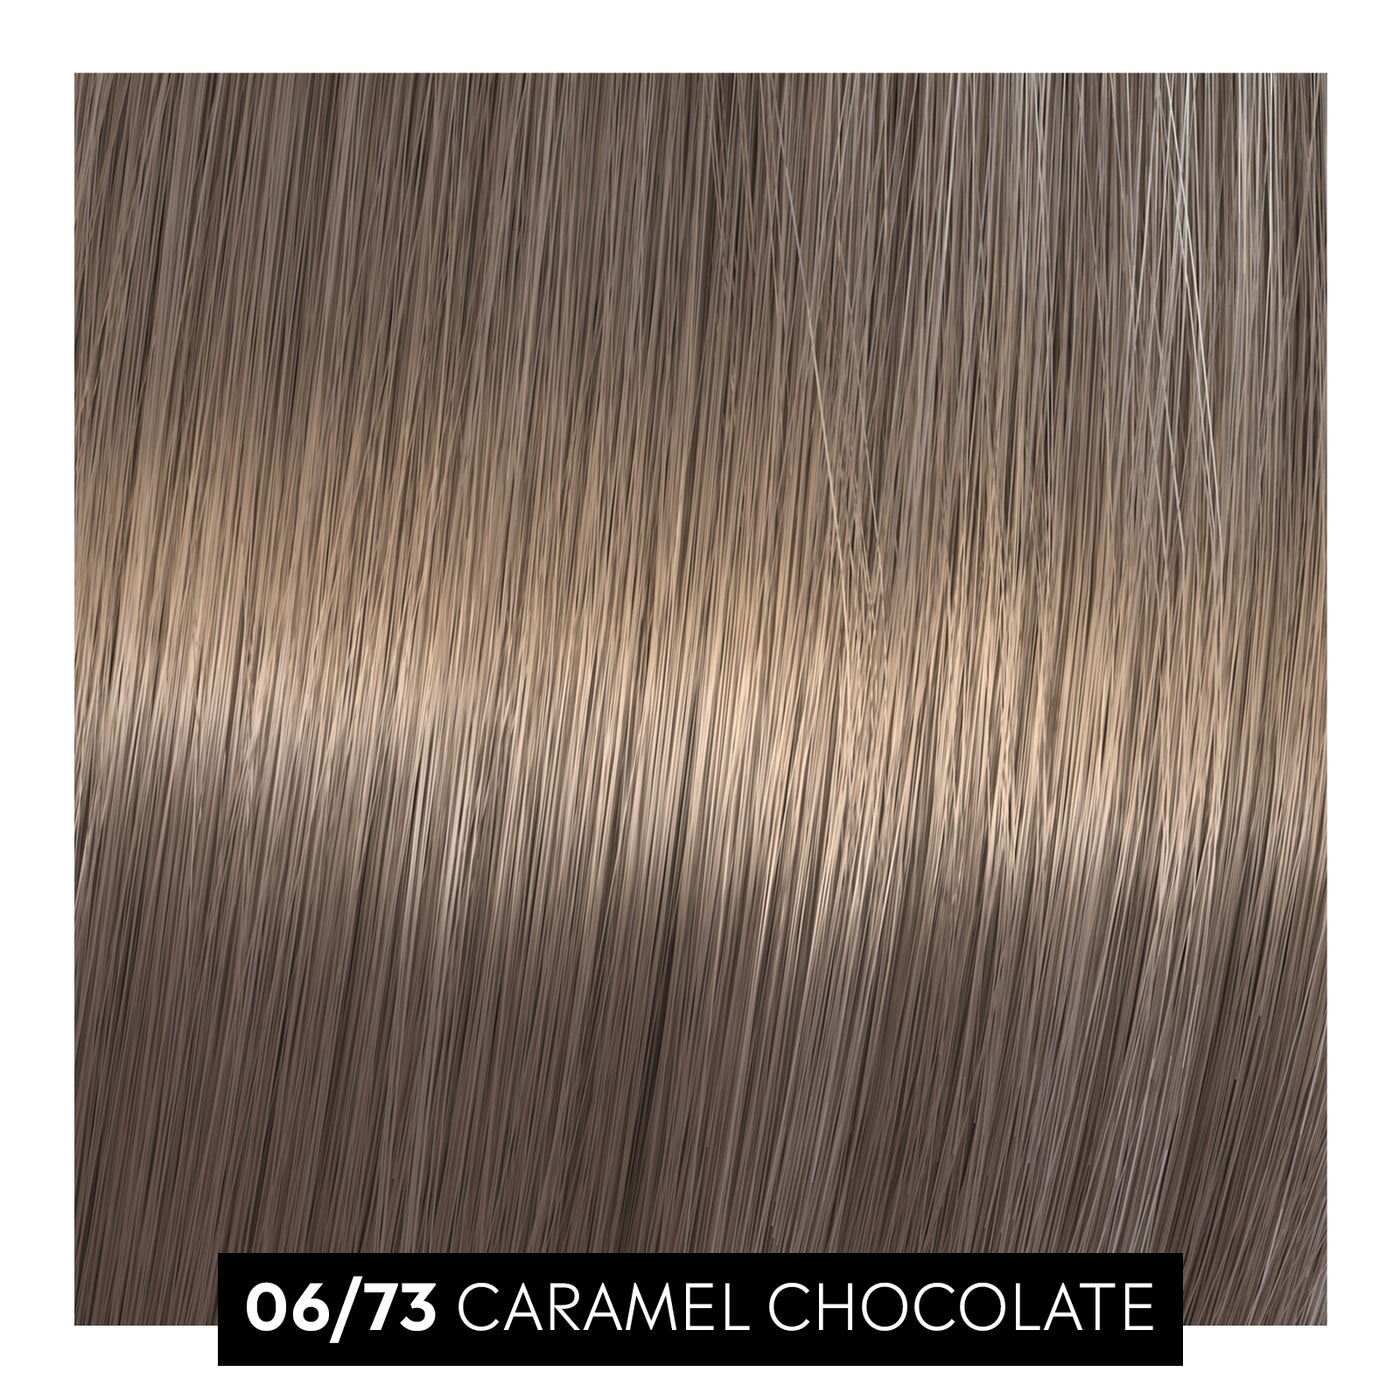 06/73 caramel chocolate